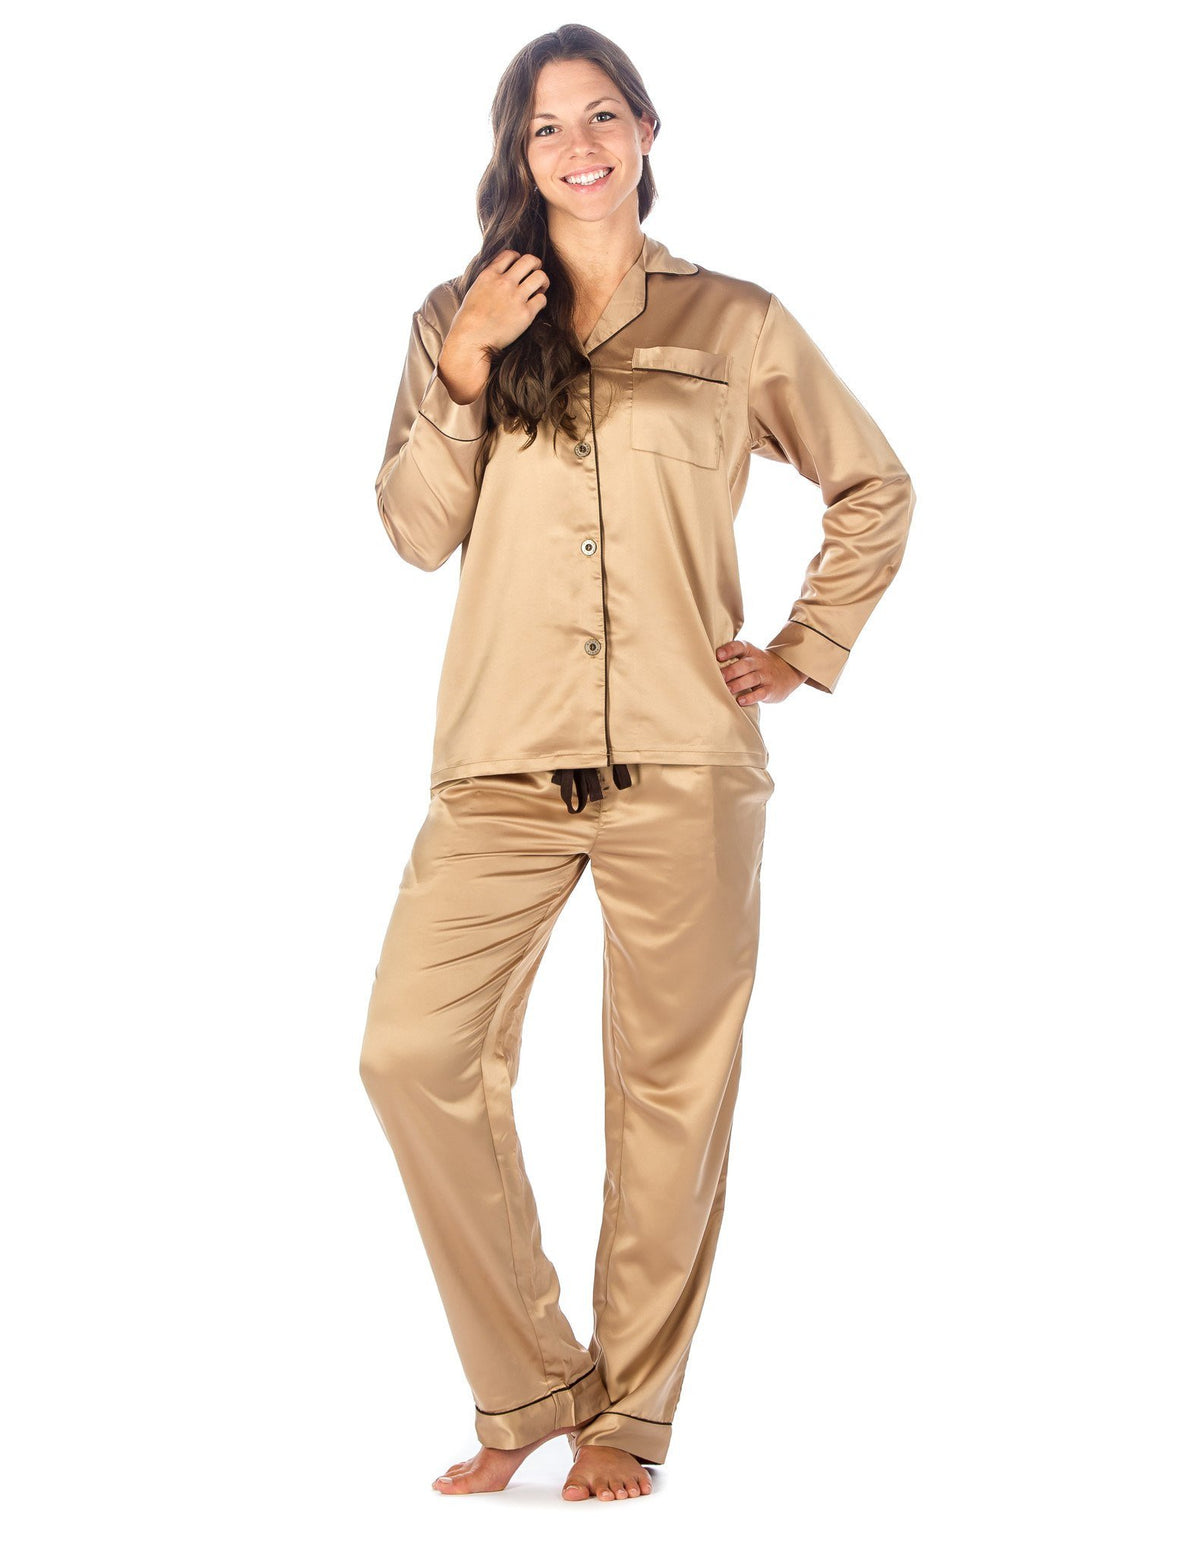 Women's Premium Satin Pajama Sleepwear Set - Champagne Glow